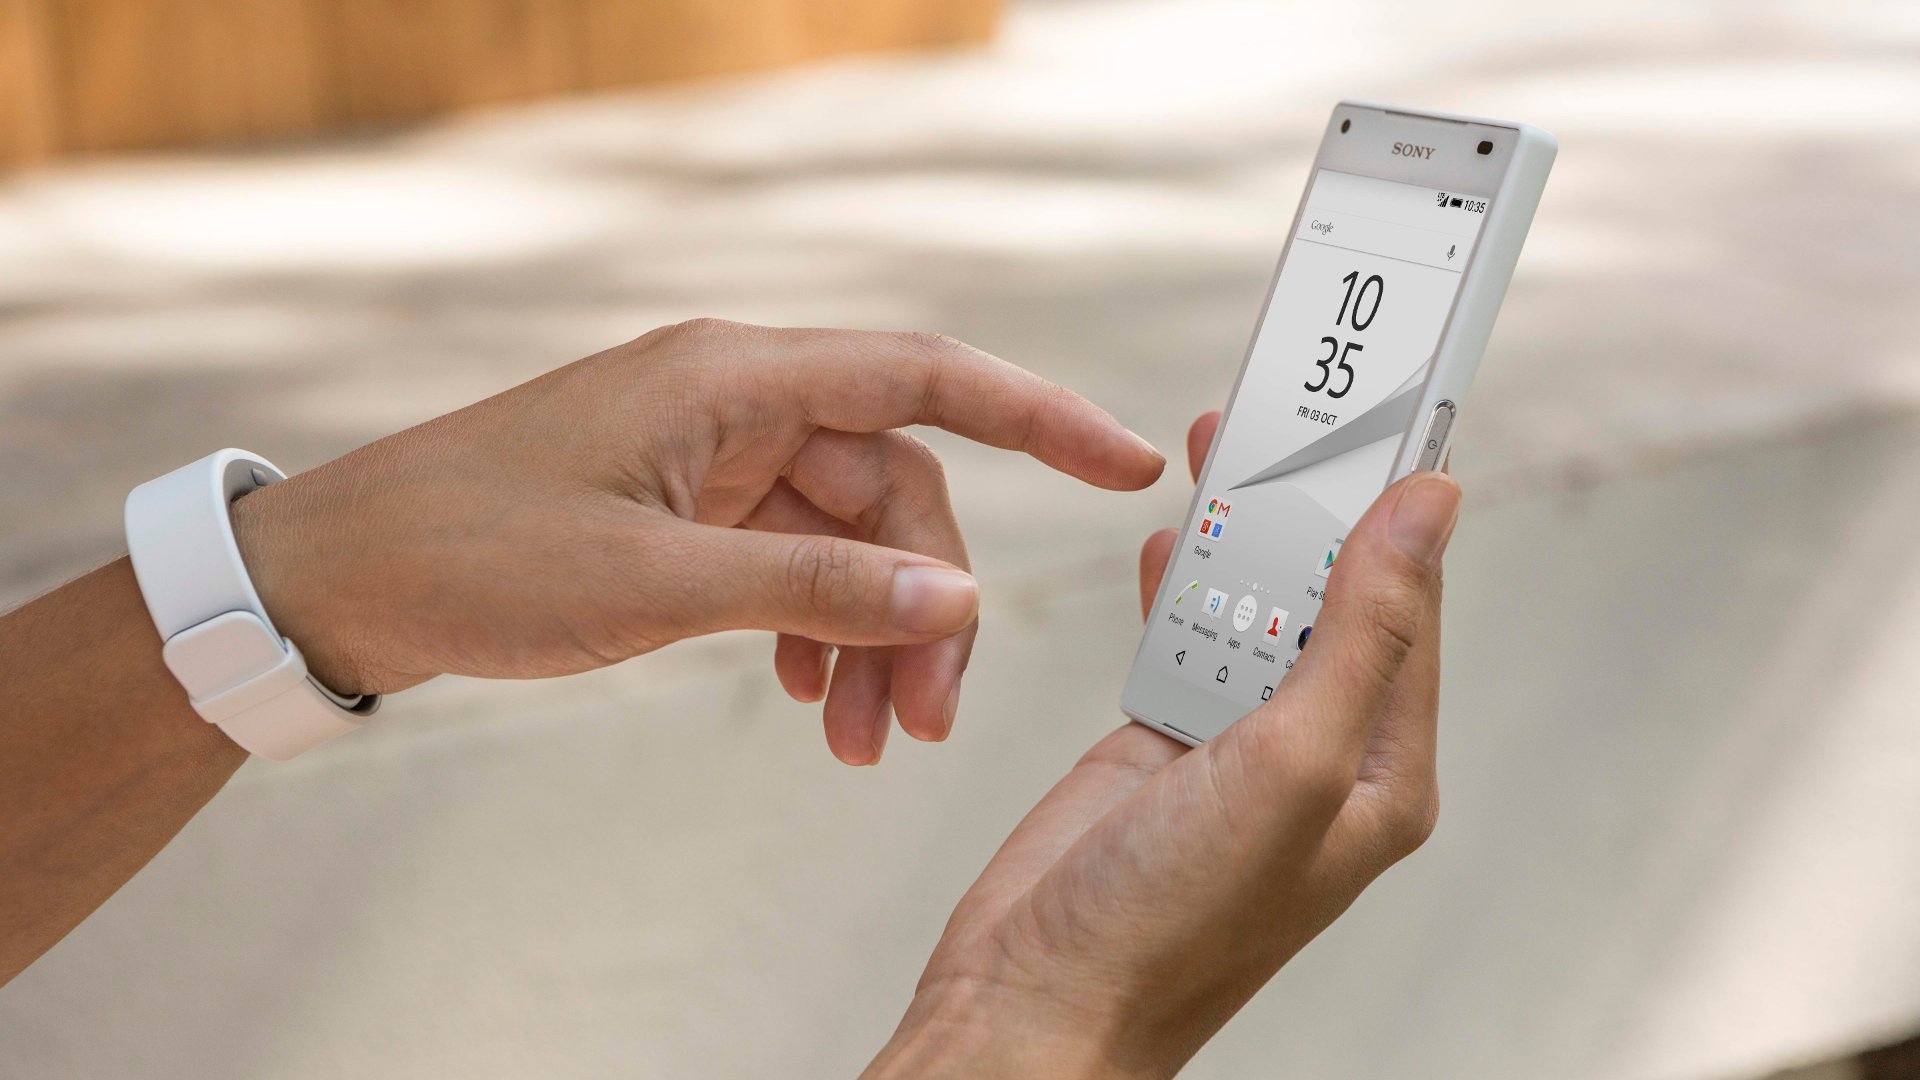 Sony Xperia Z5 - Fingerprint Scanner